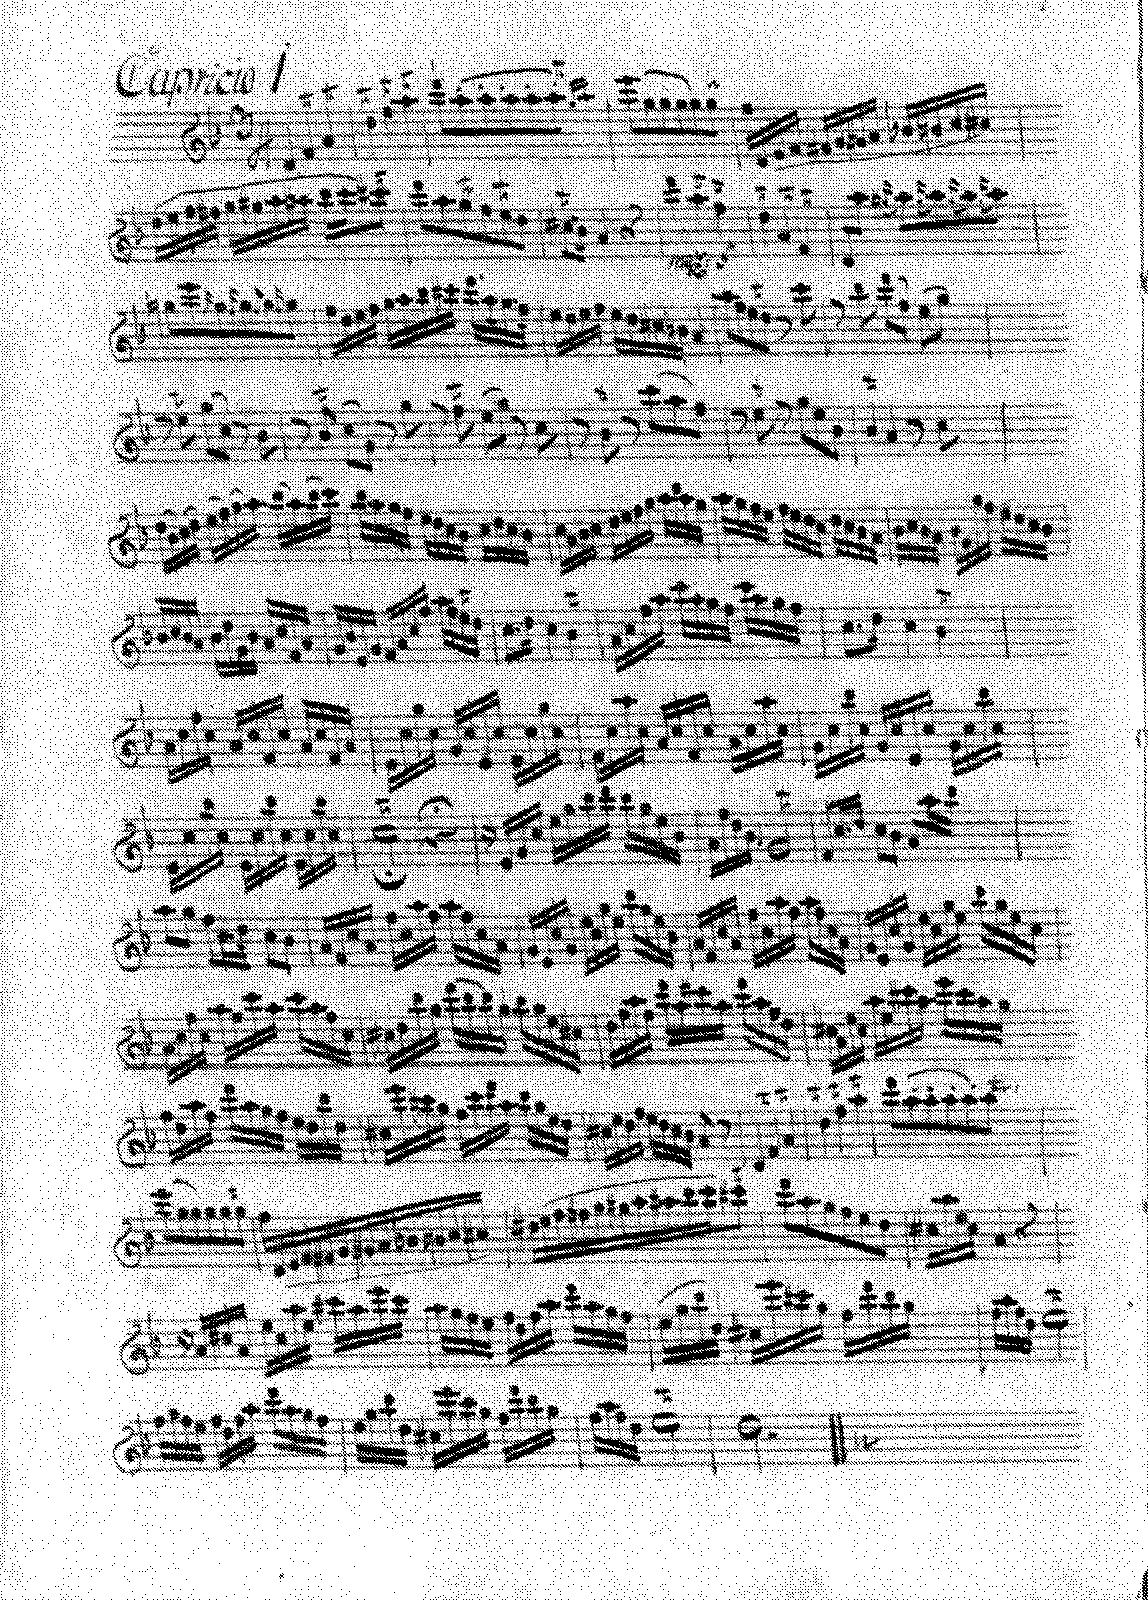 8 Capriccios, Giedde I.17 (Quantz, Johann Joachim) - IMSLP